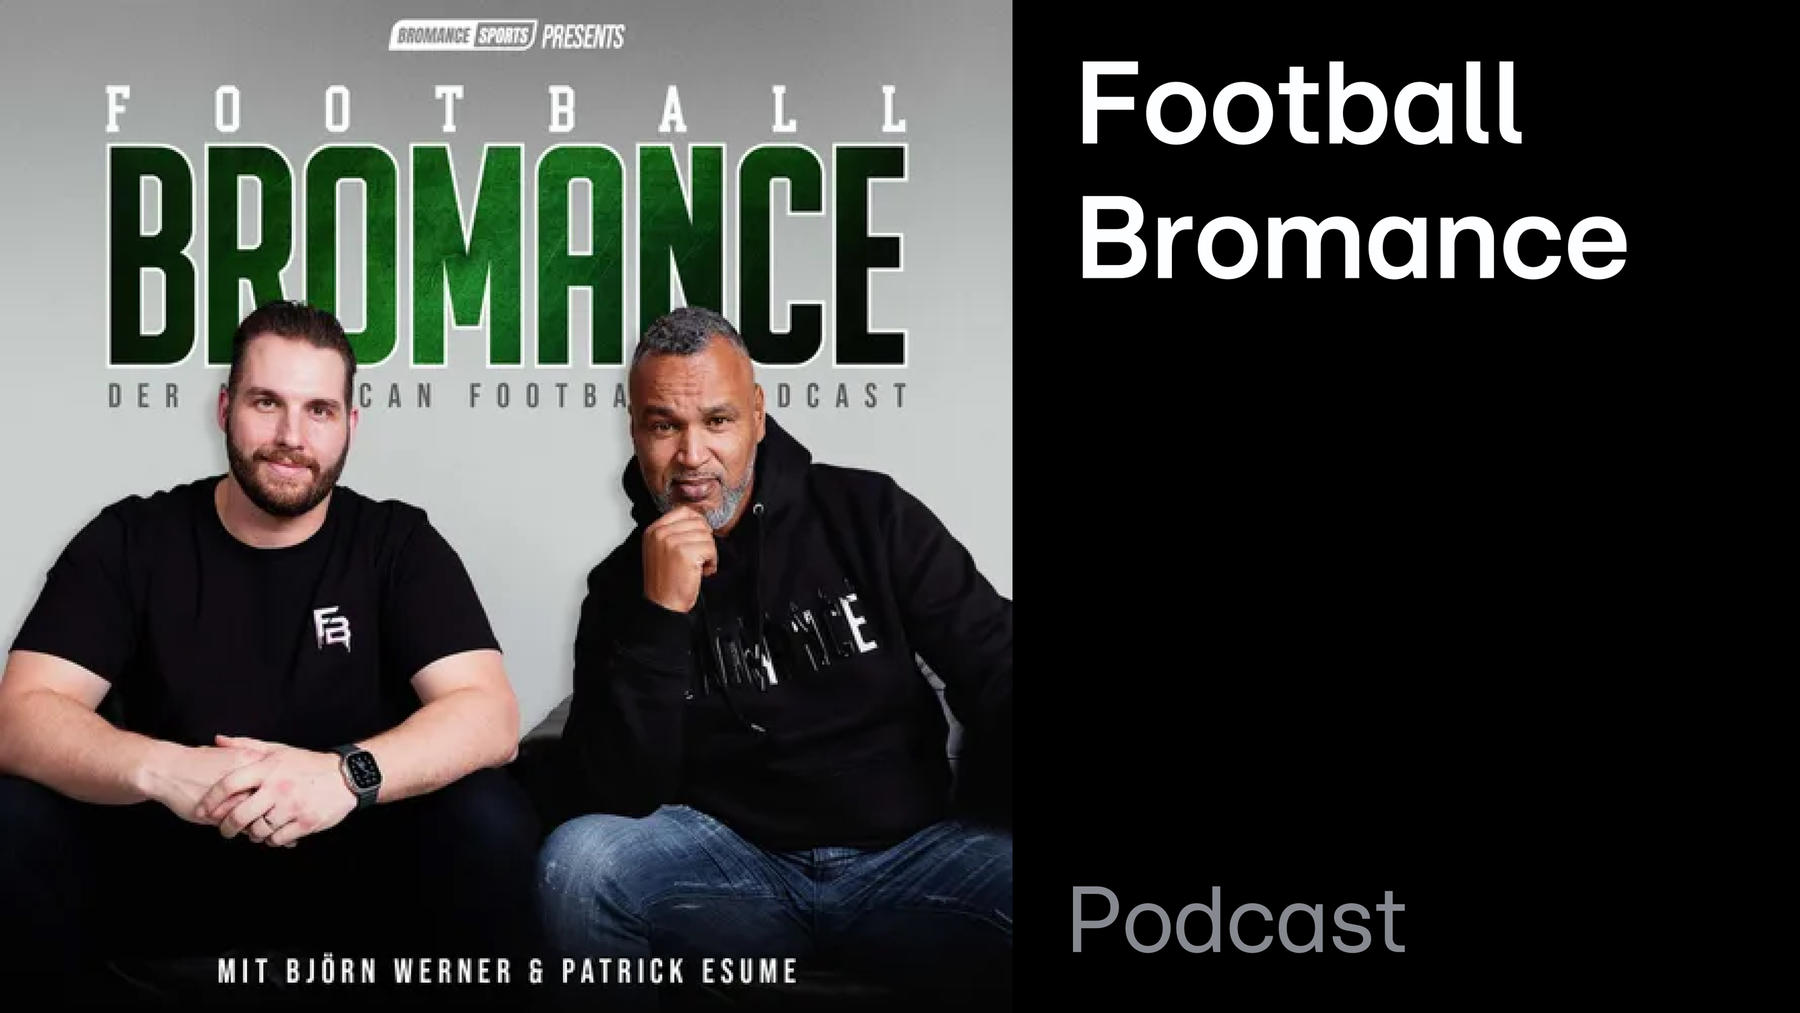 Podcast: FOOTBALL BROMANCE